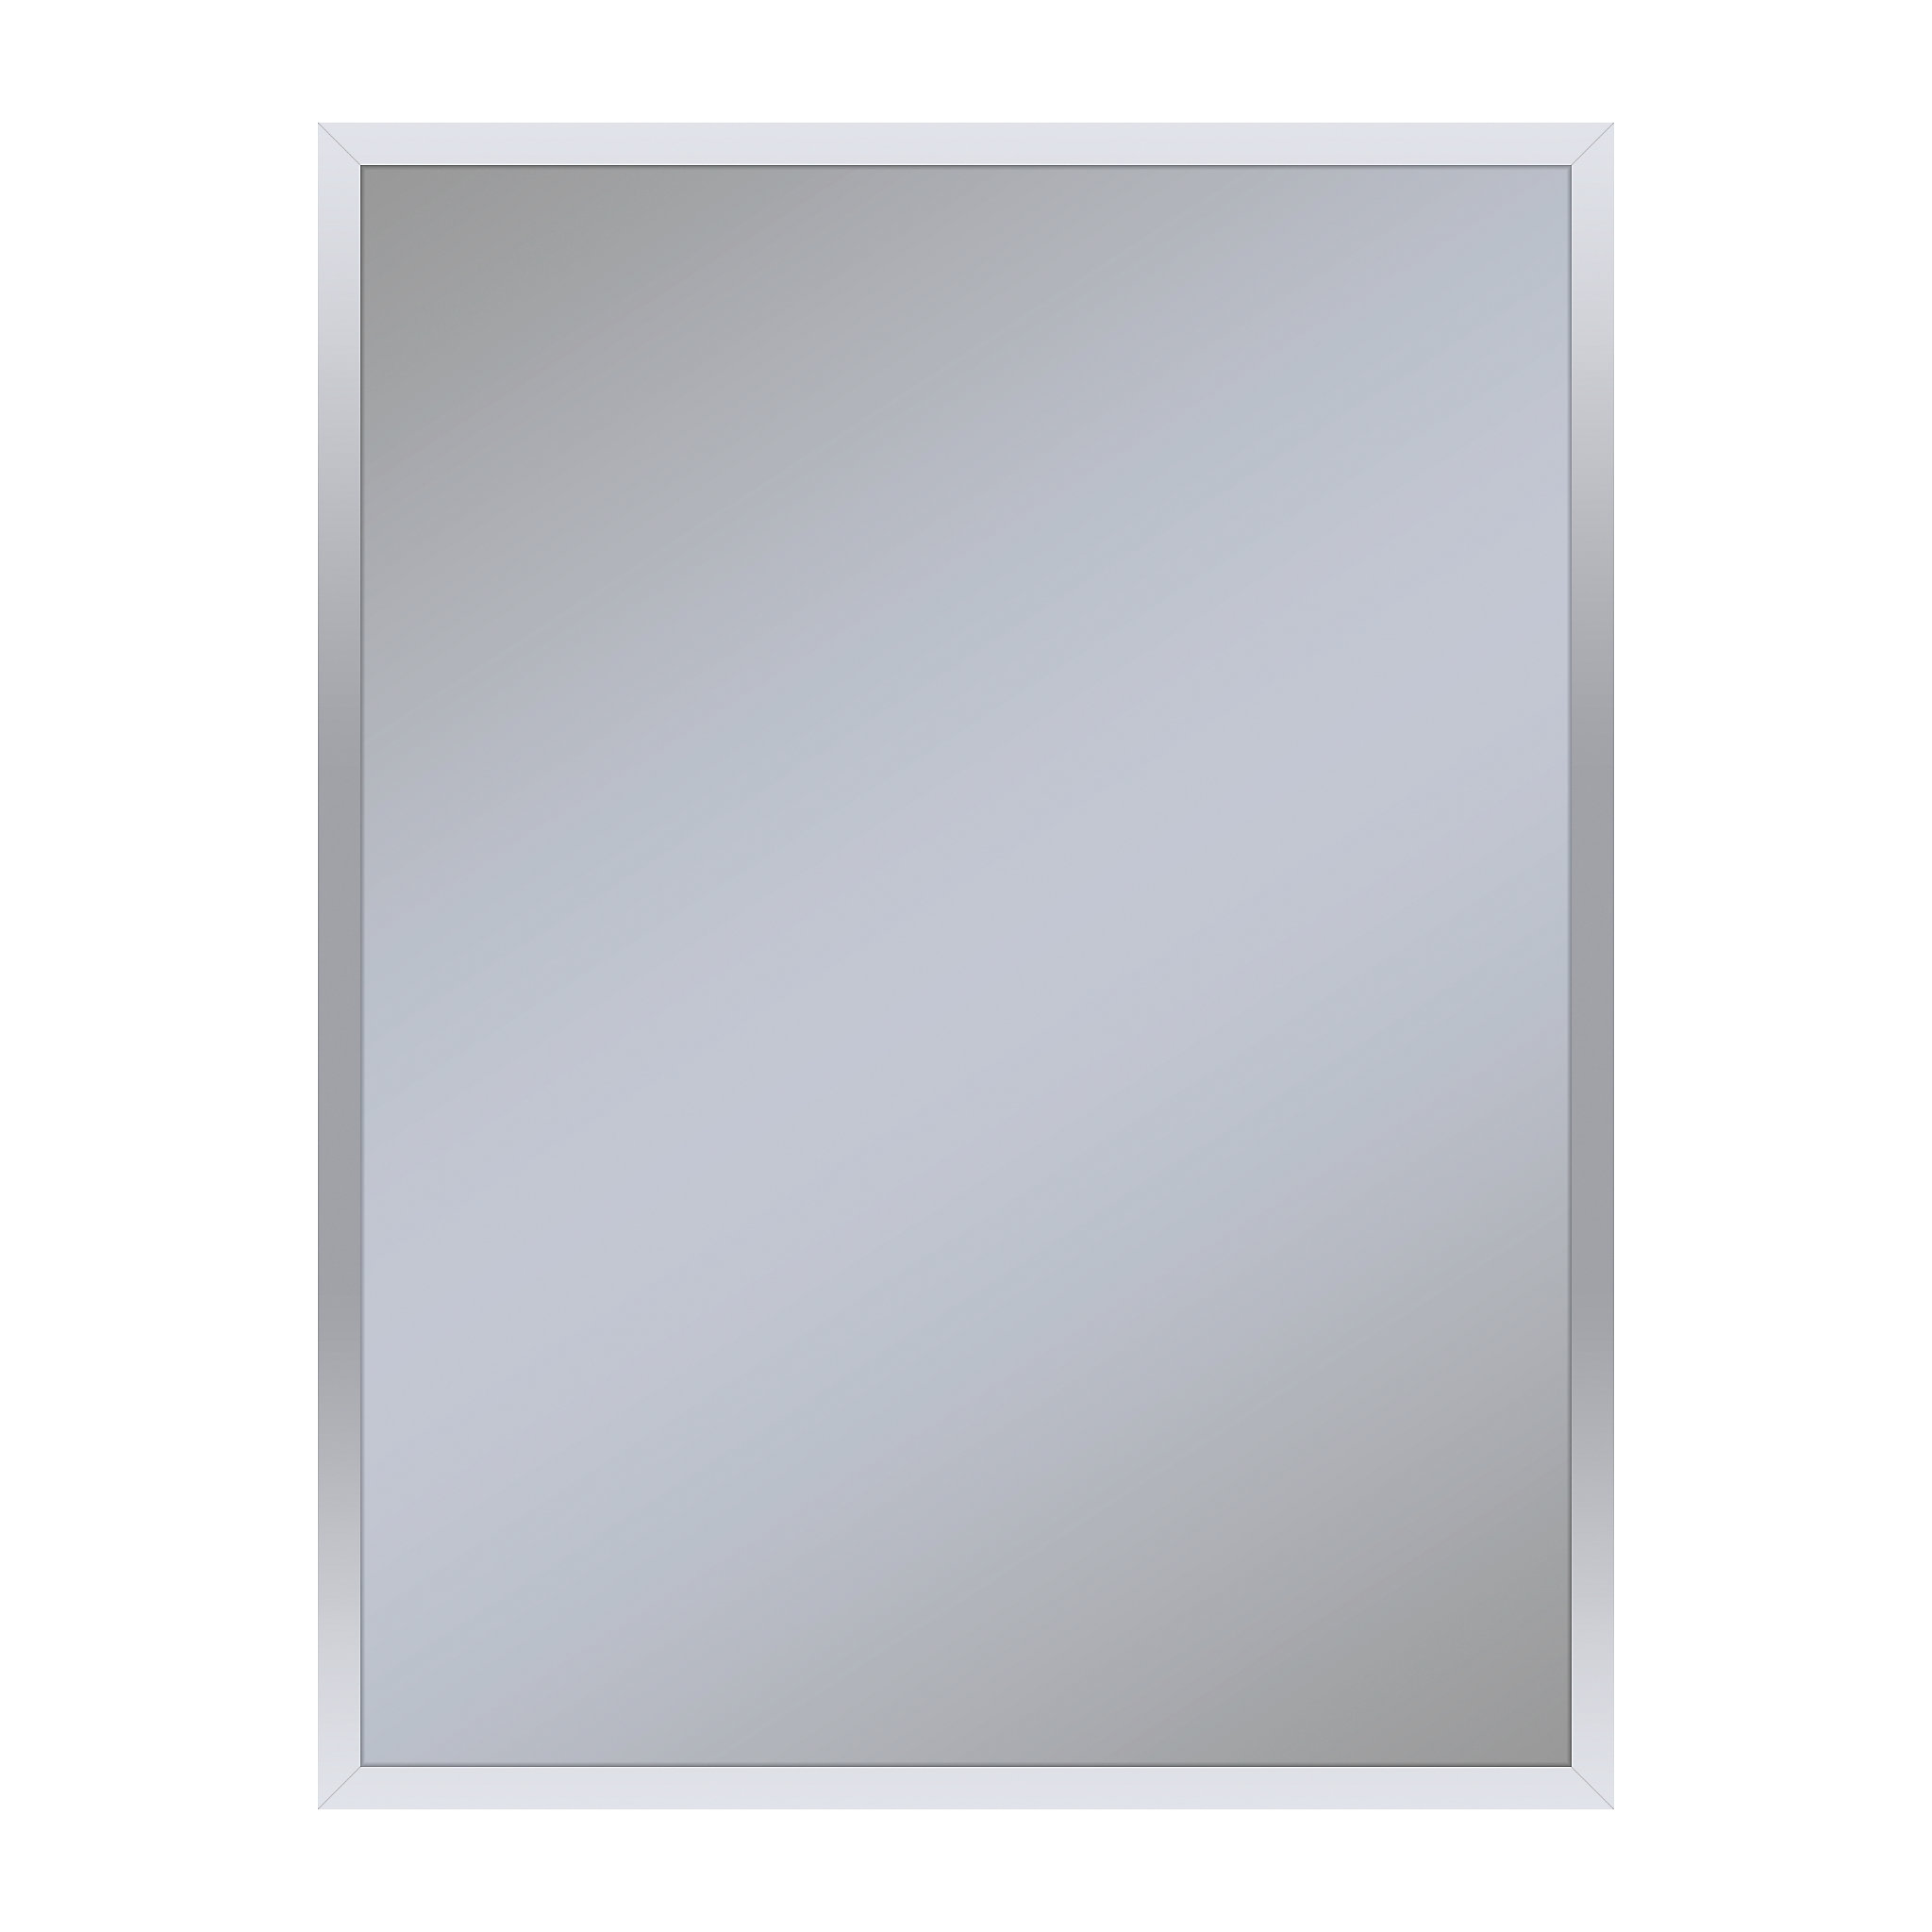 Robern PM2430T76Profiles Framed Mirror, 24" x 30" x 3/4", Chrome